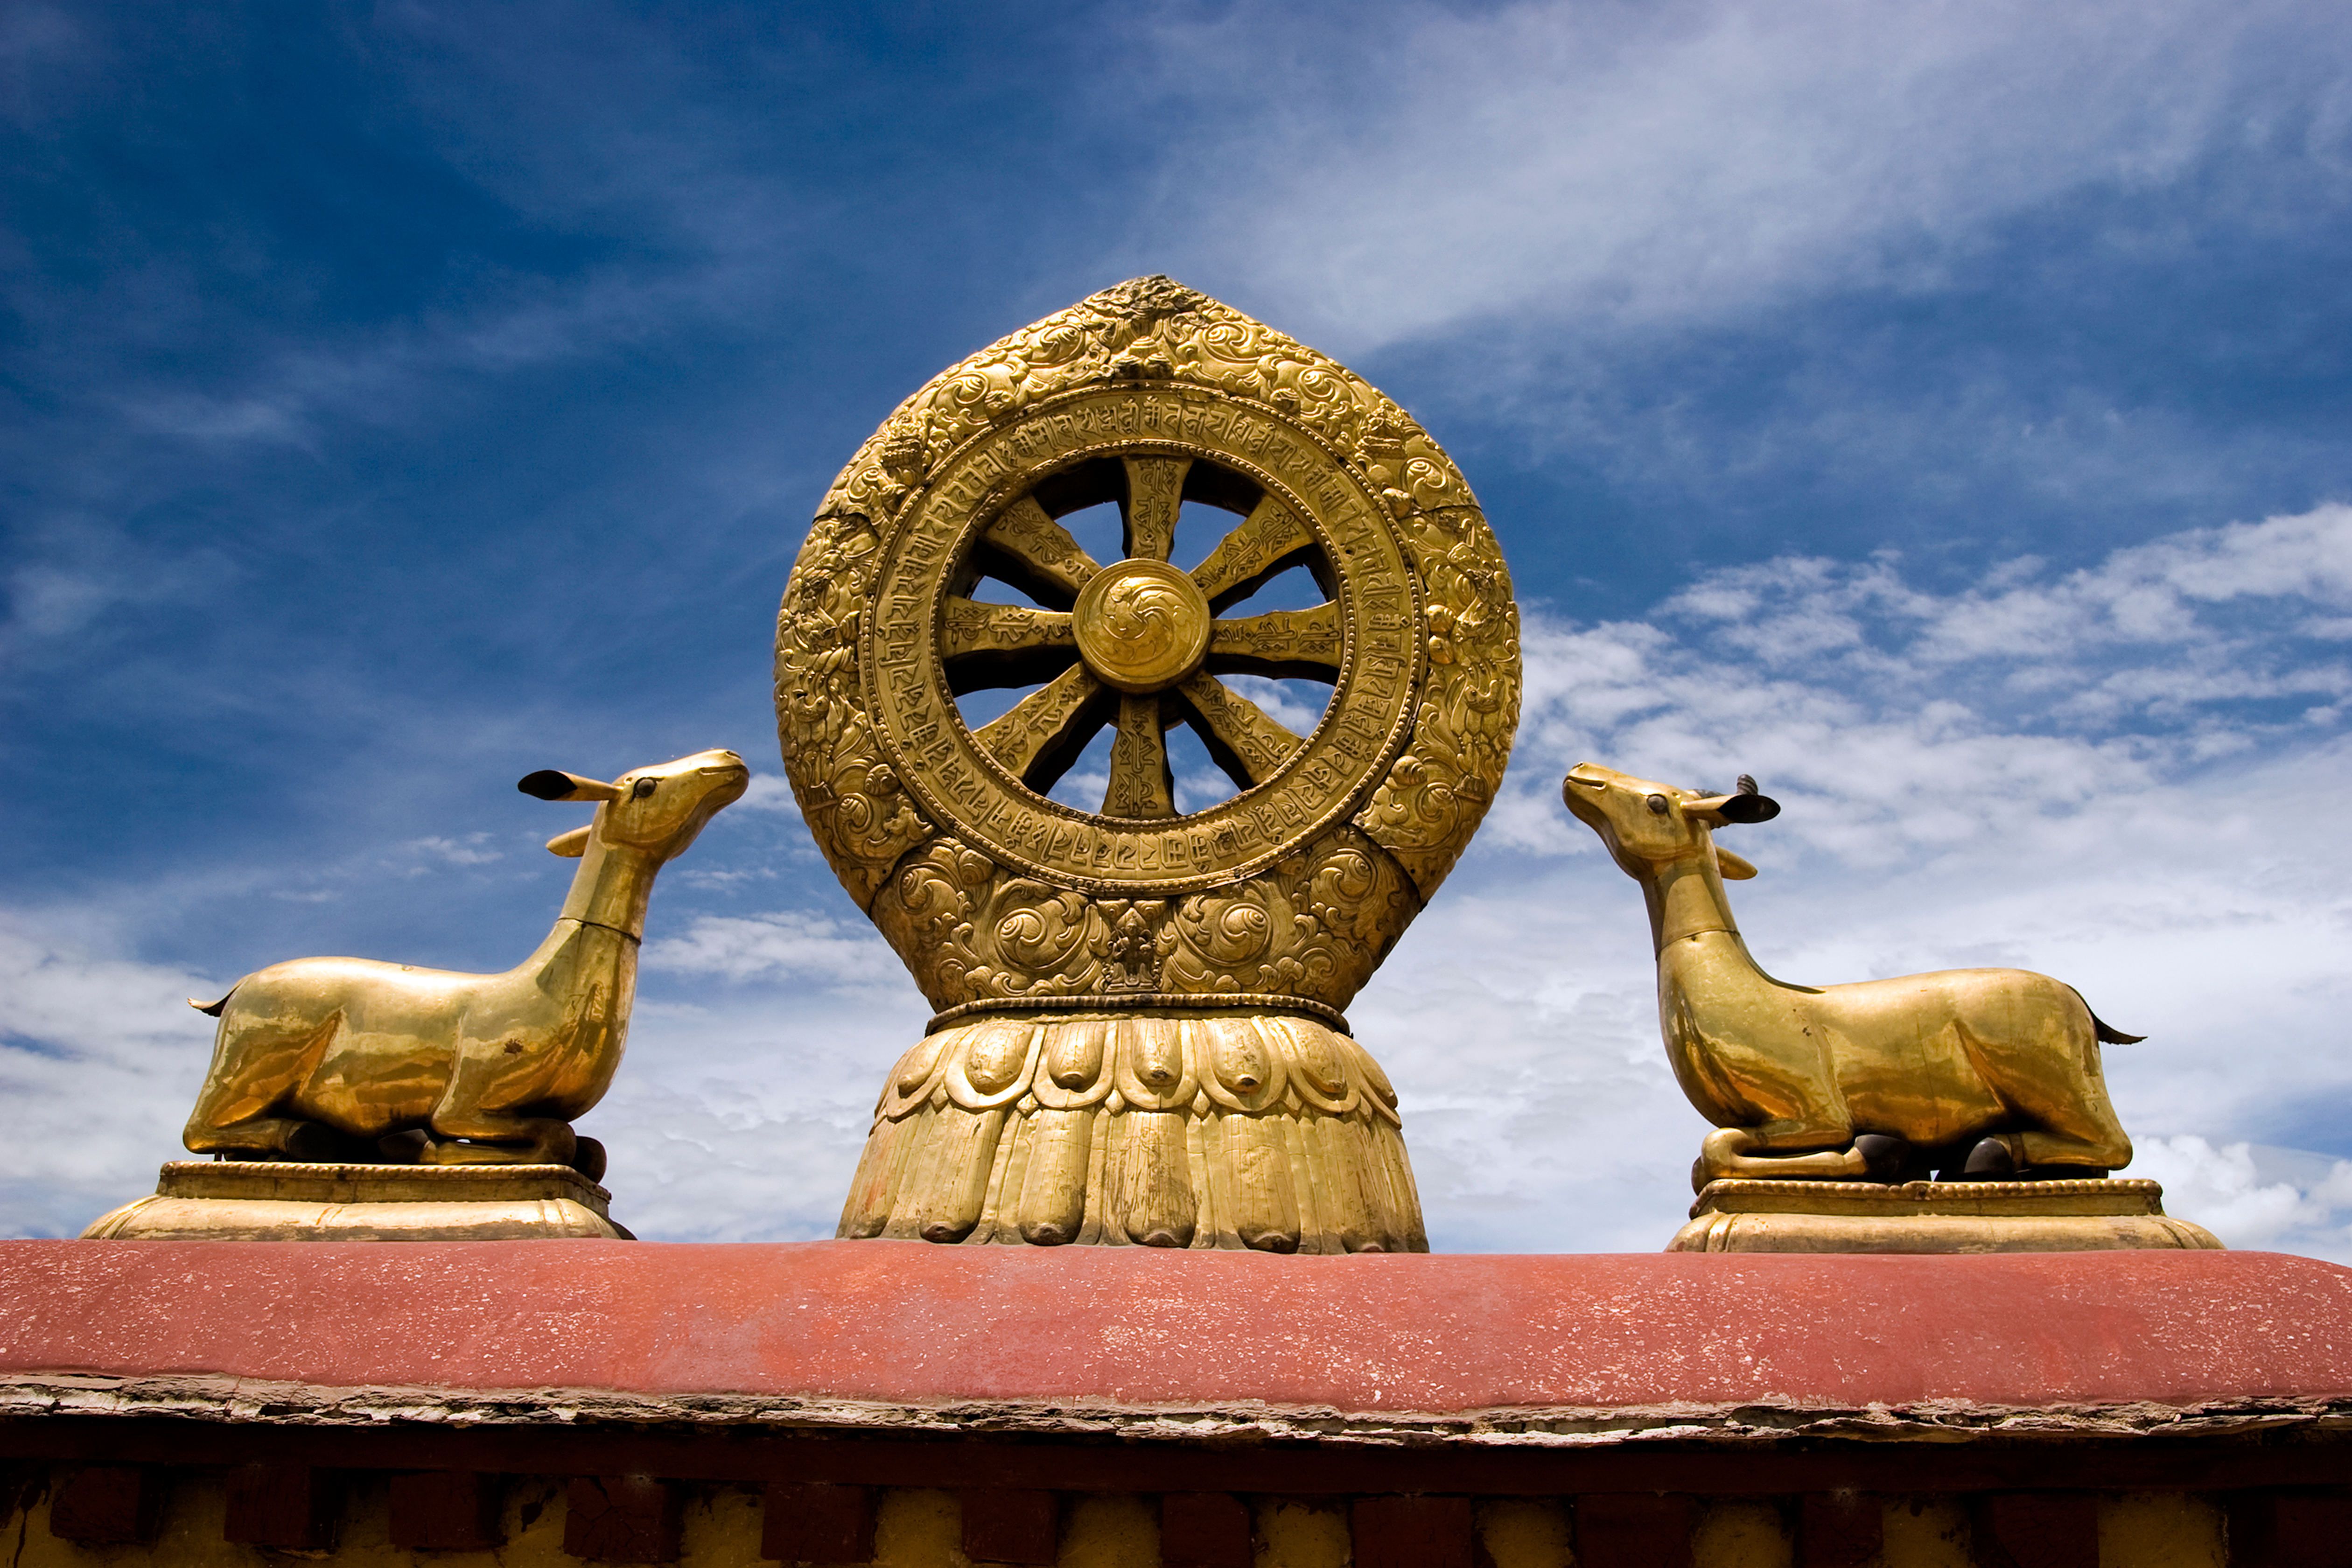 The Wheel of Dharma